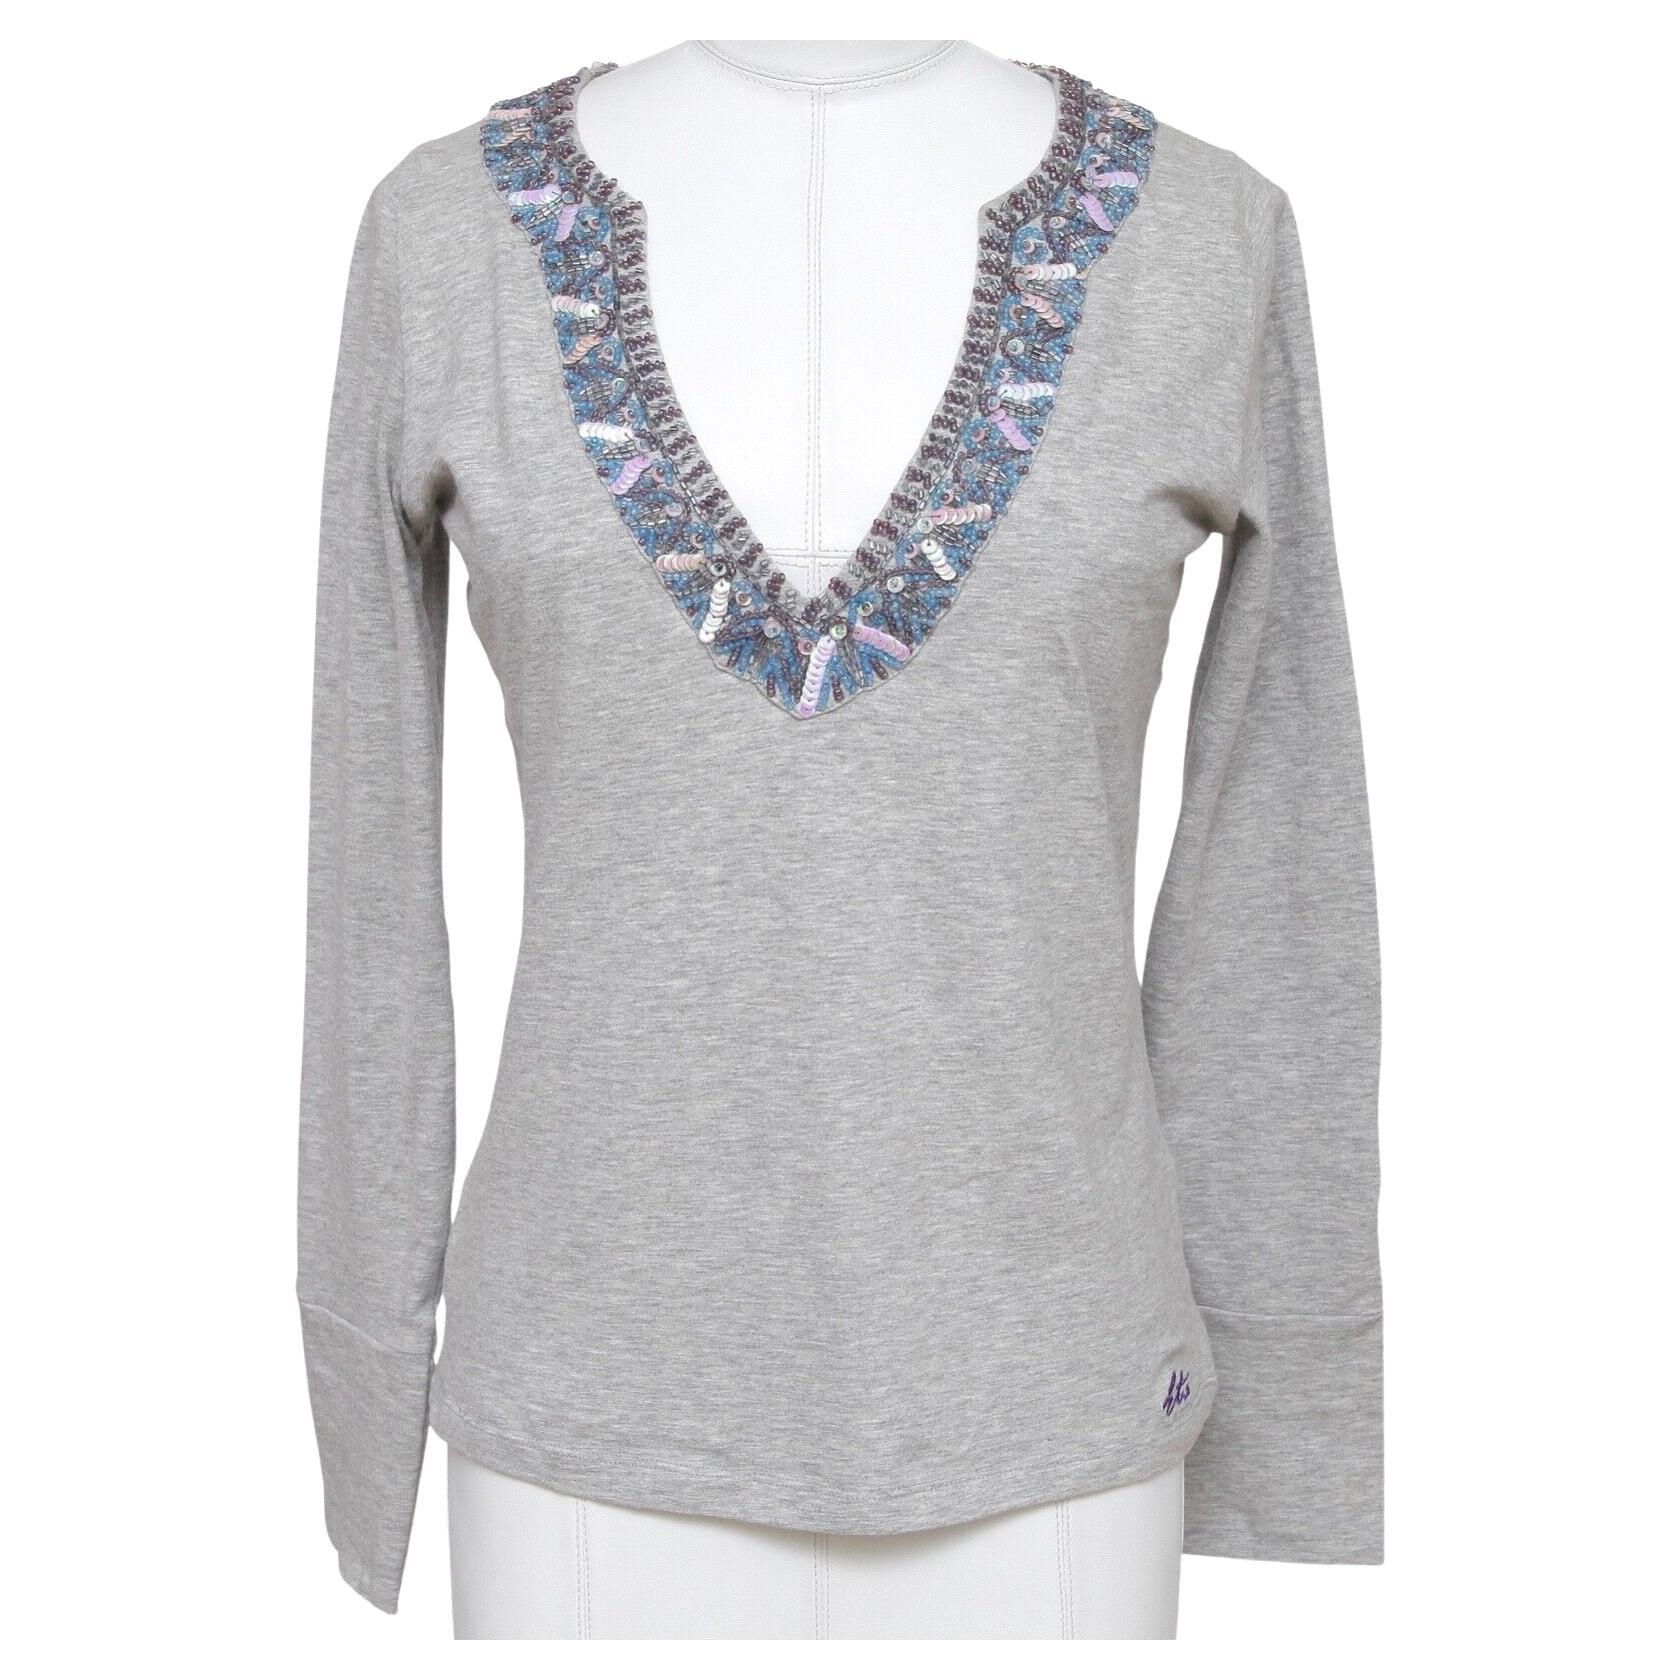 ETRO Top Shirt T-Shirt Grey Beads Sequin V-neck Long Sleeve Cotton Sz 42 For Sale